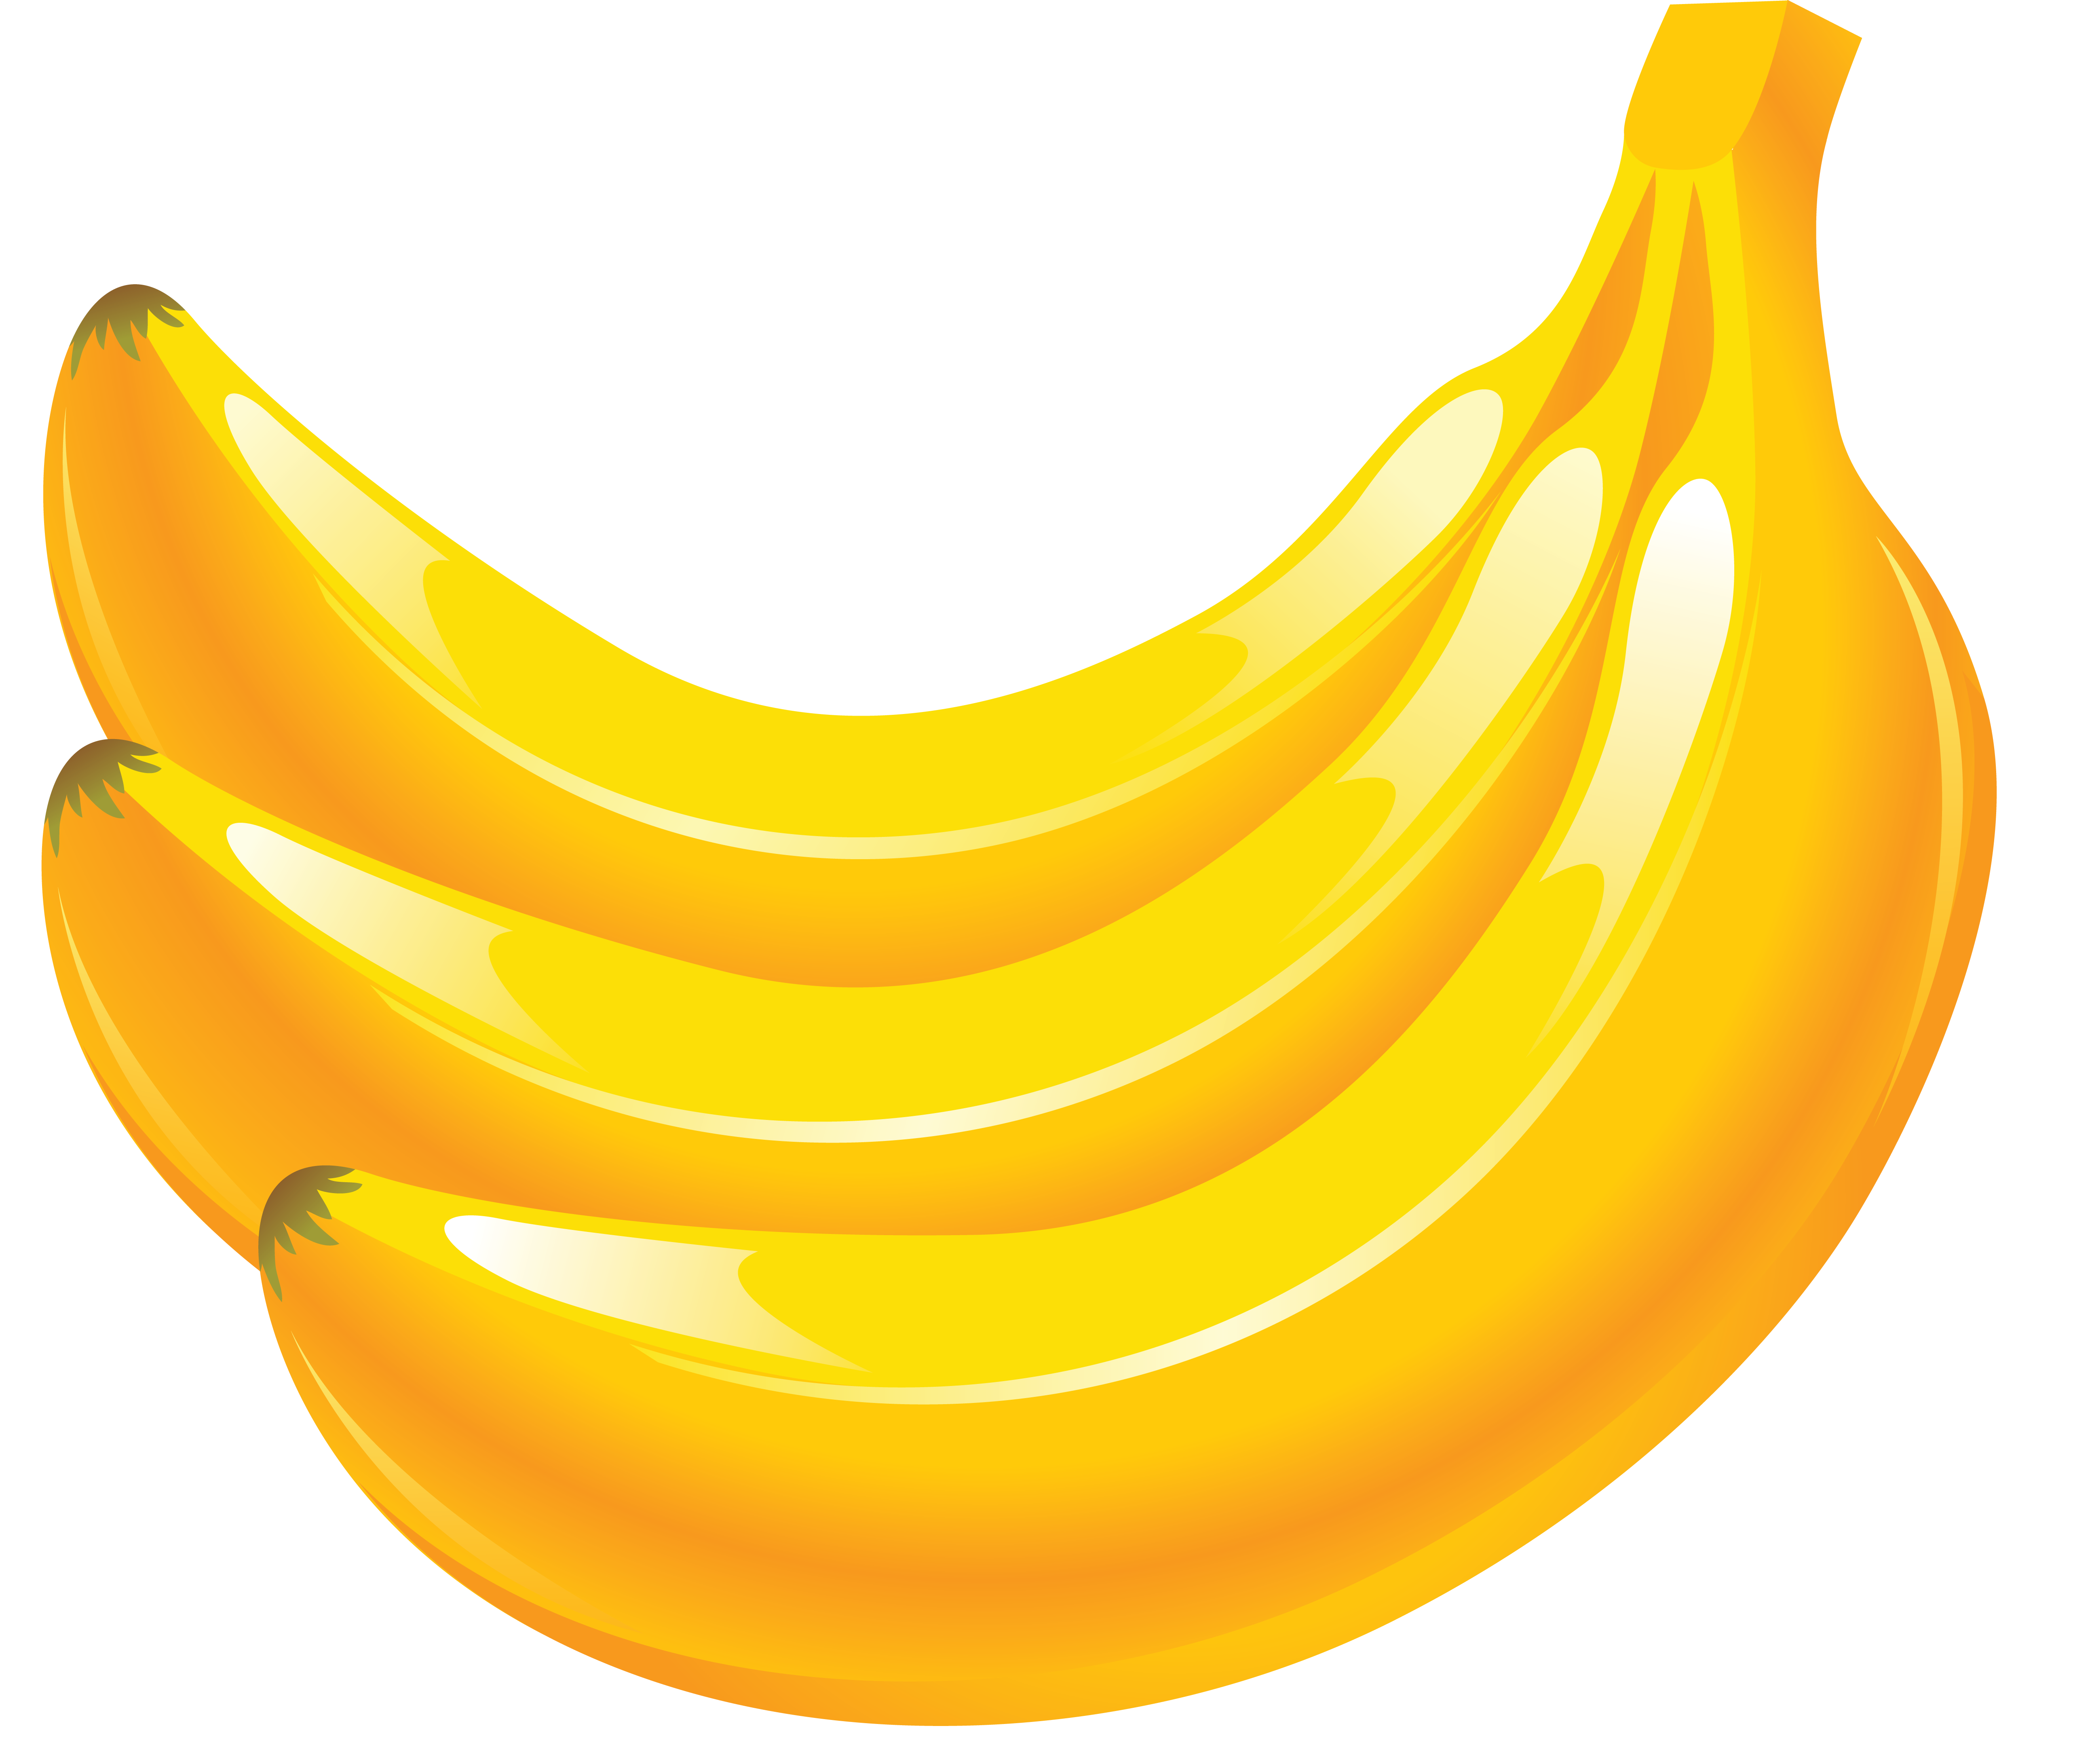 3 gelbe Bananen